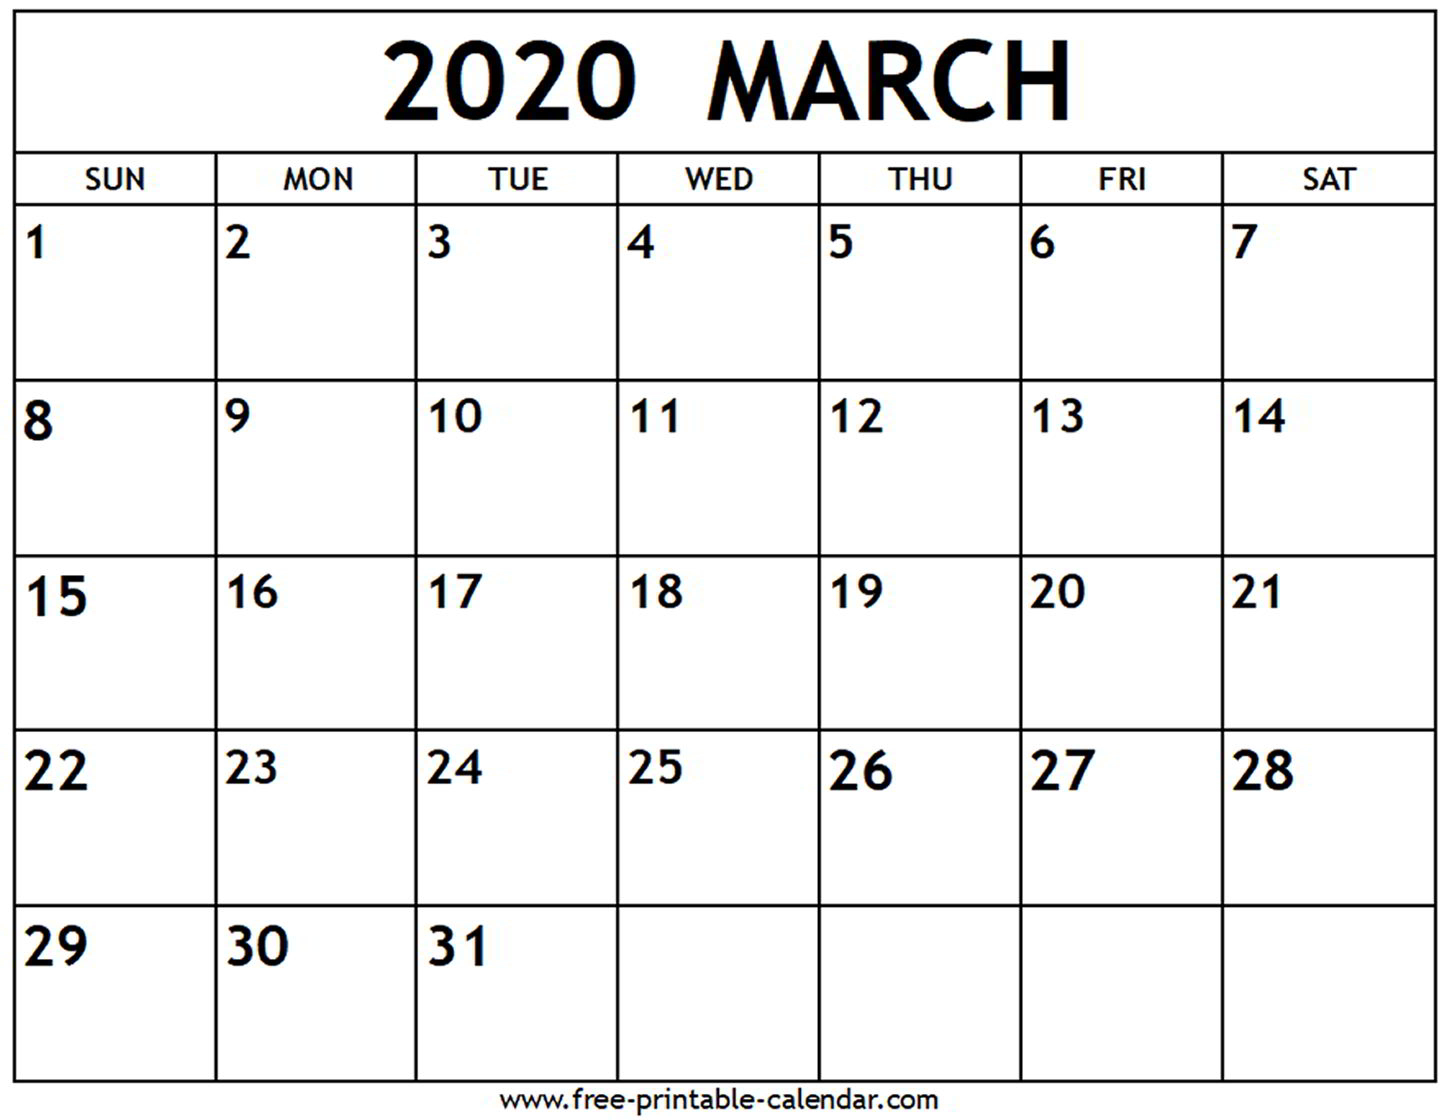 March 2020 Calendar - Free-Printable-Calendar